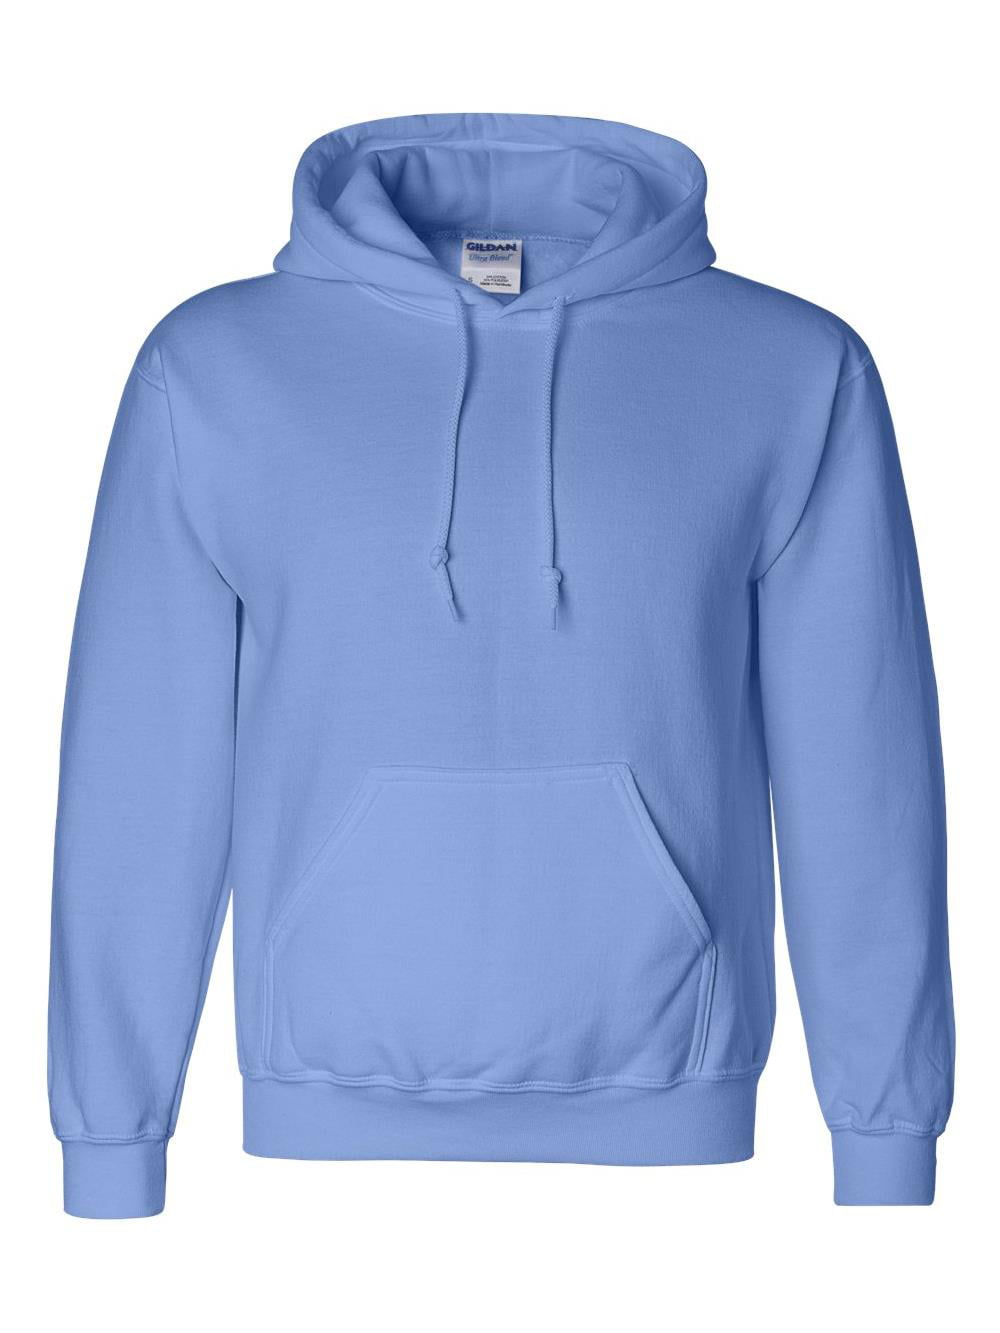 12500 Gildan Fleece DryBlend Hooded Sweatshirt - Walmart.com